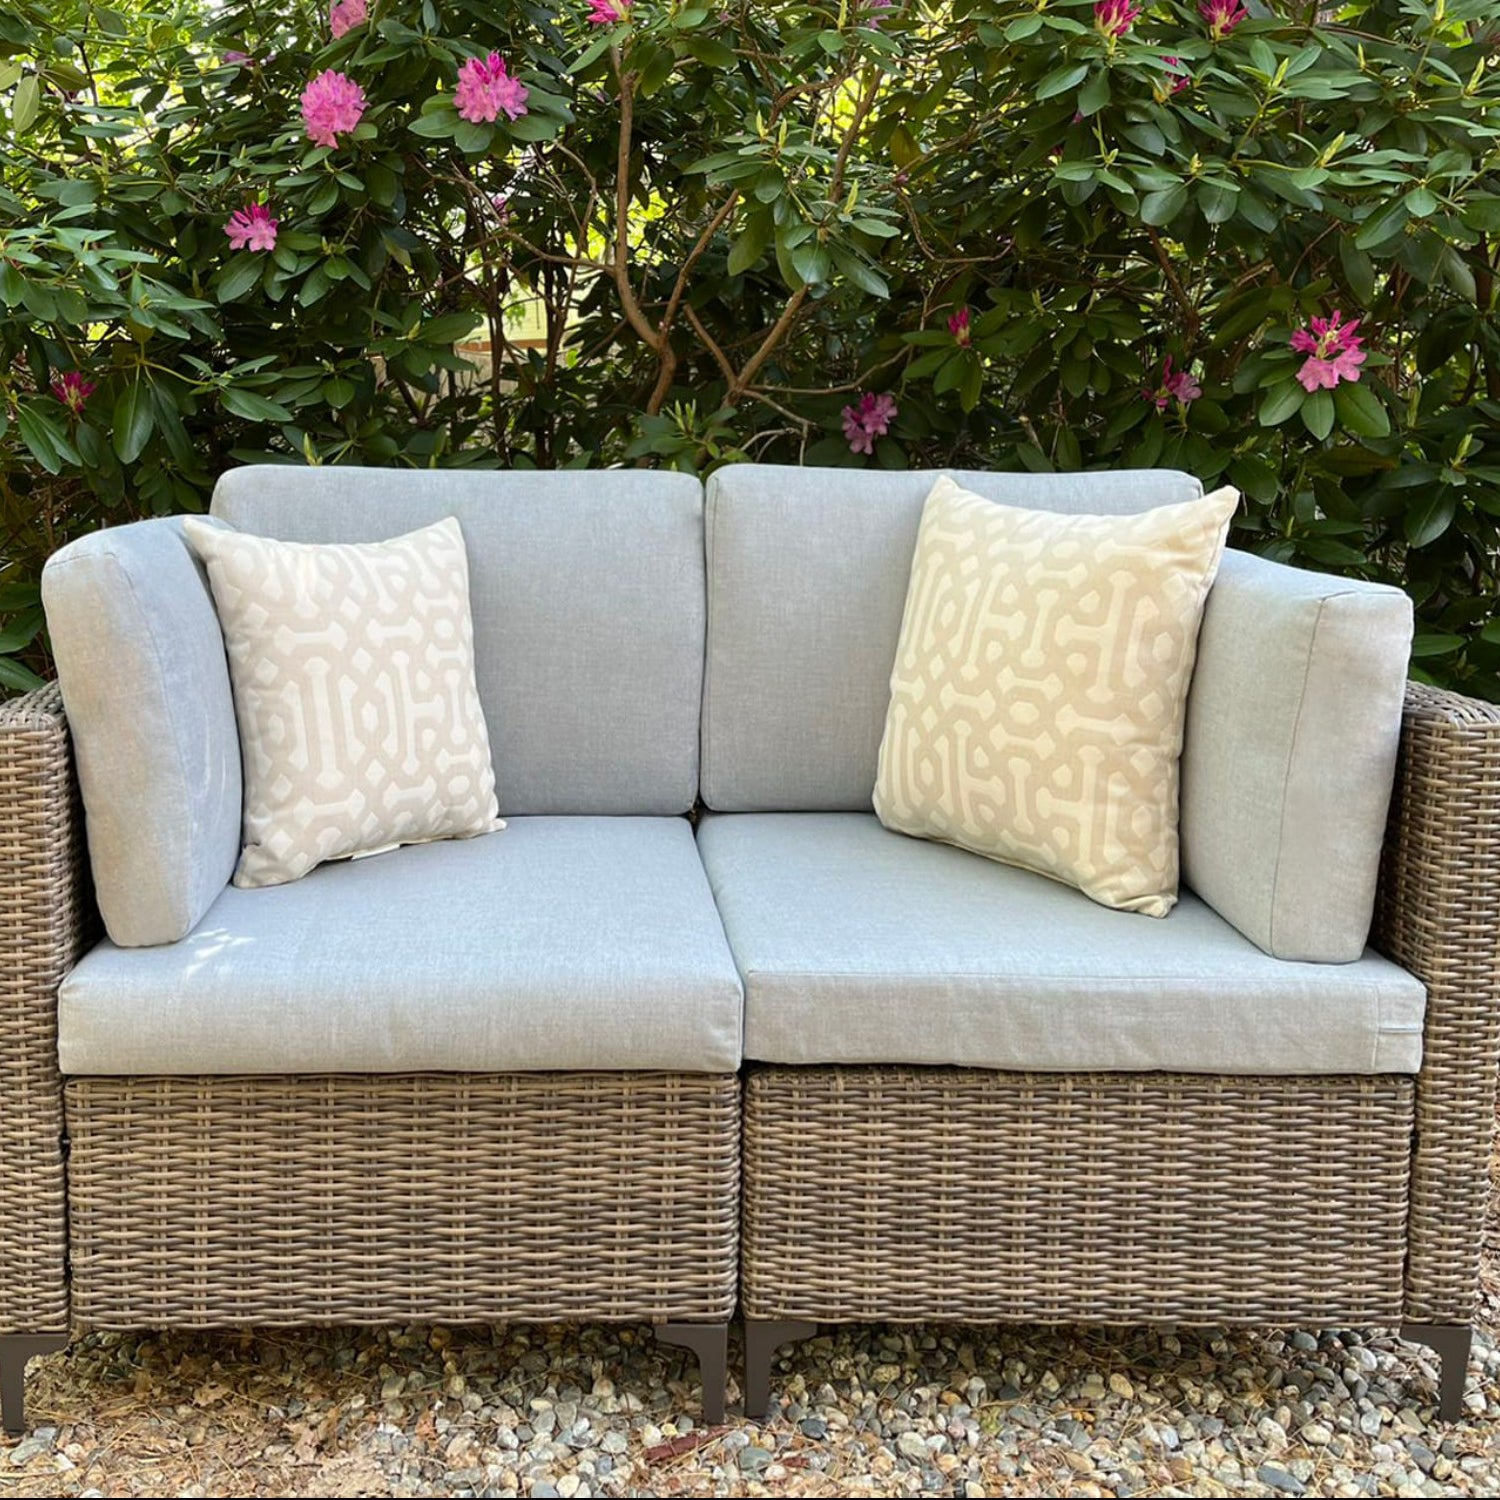 Vicllax Outdoor Aluminum Brown Rattan Sectional Sofa Set, Patio Sectional Sofa Set